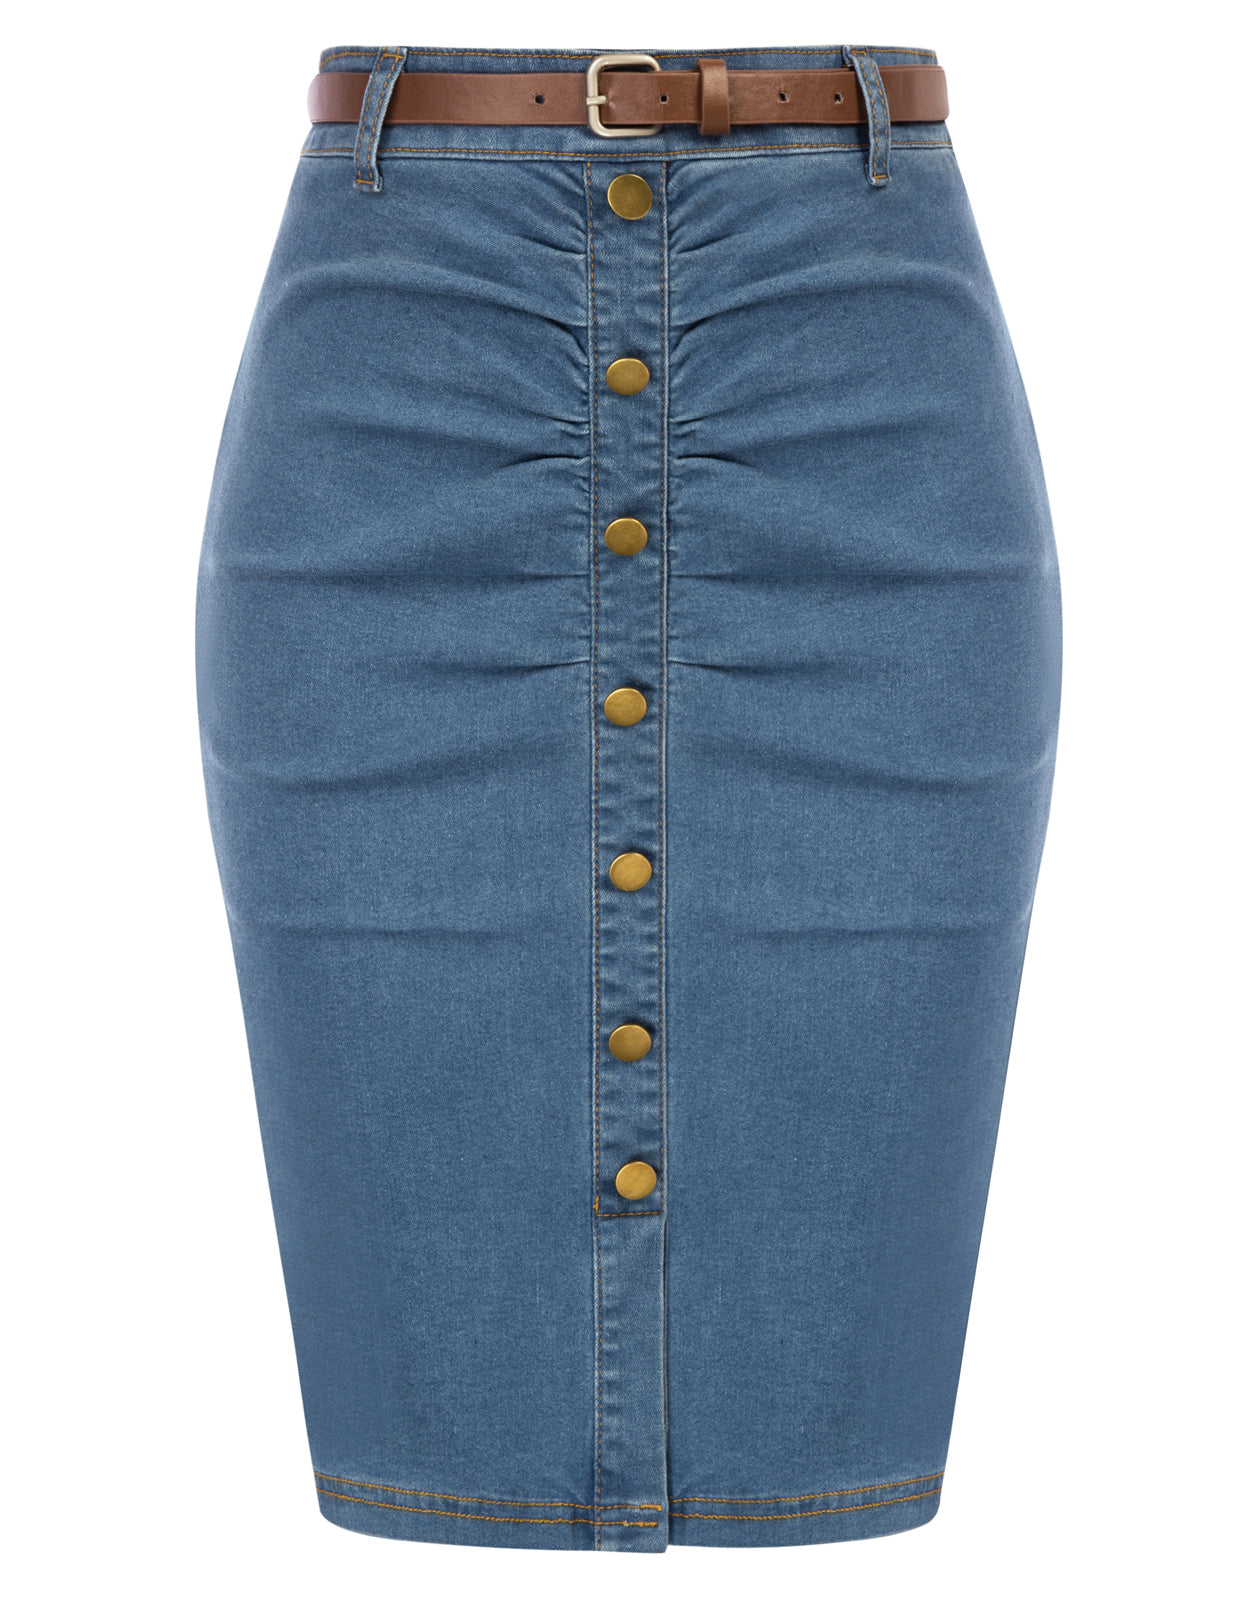 Vintage Jean Skirt